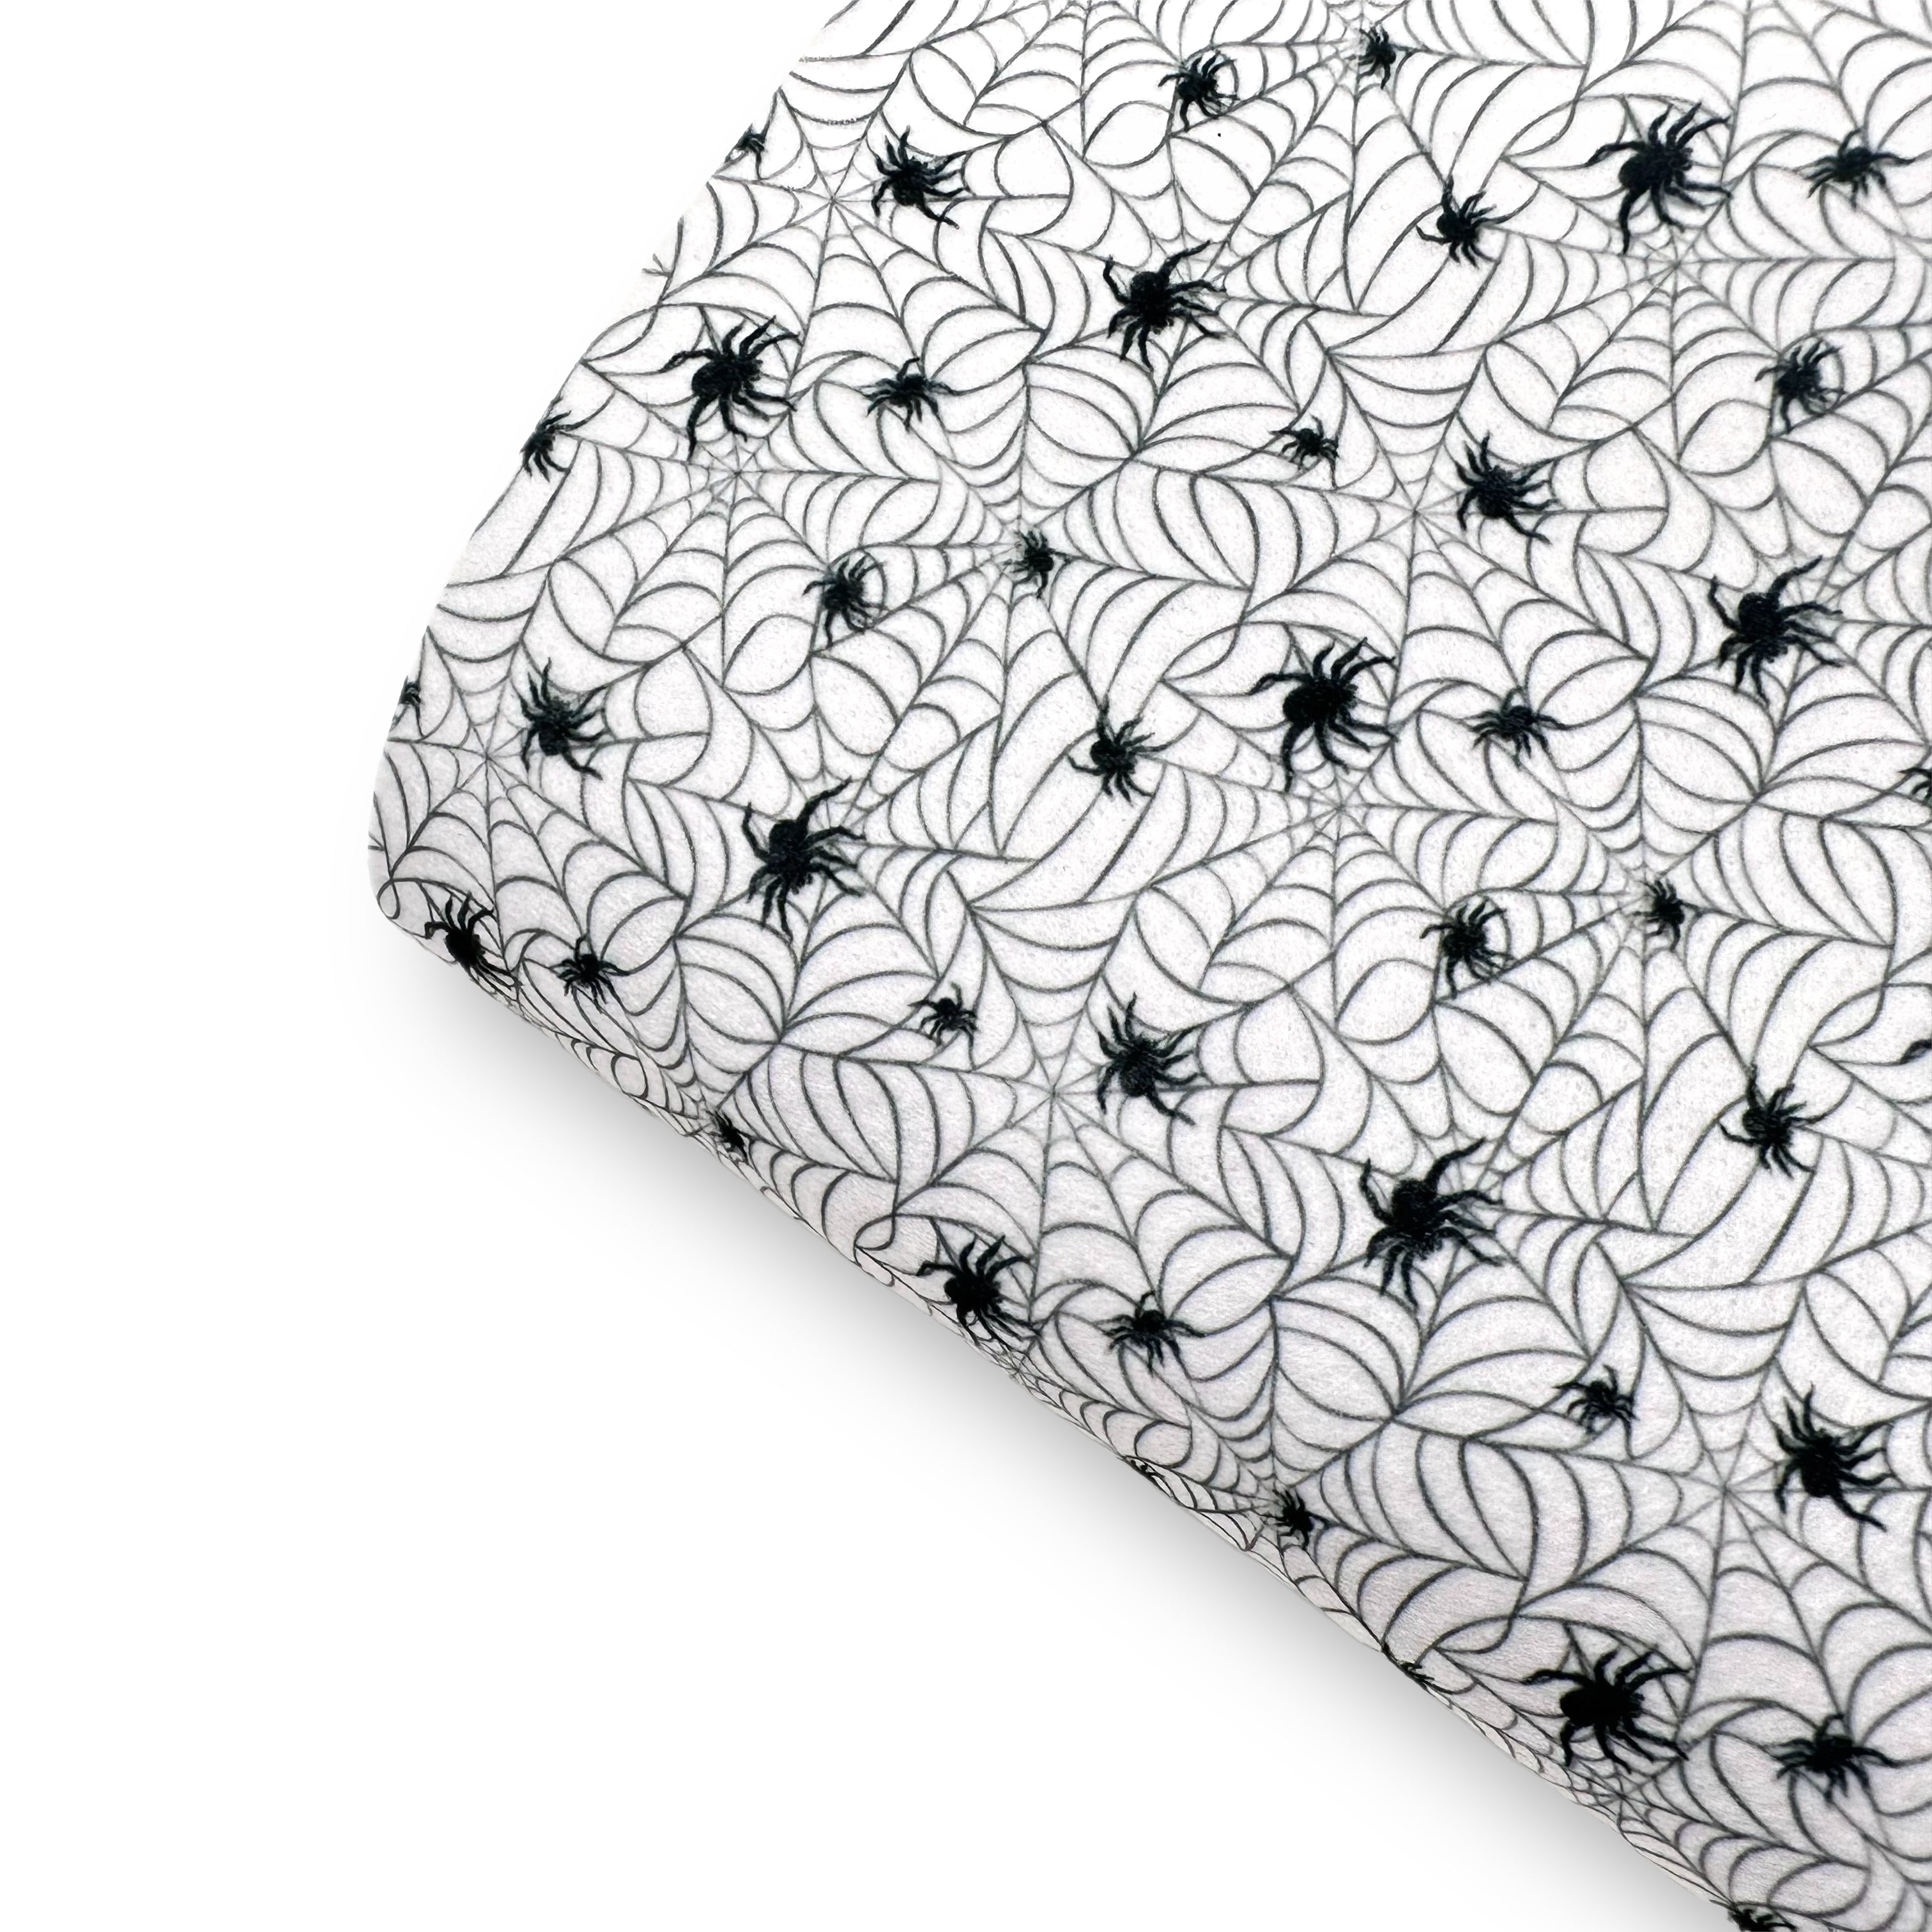 Spider Webs- Felt, Suede, Velvet or Satin Premium Fabric Sheets